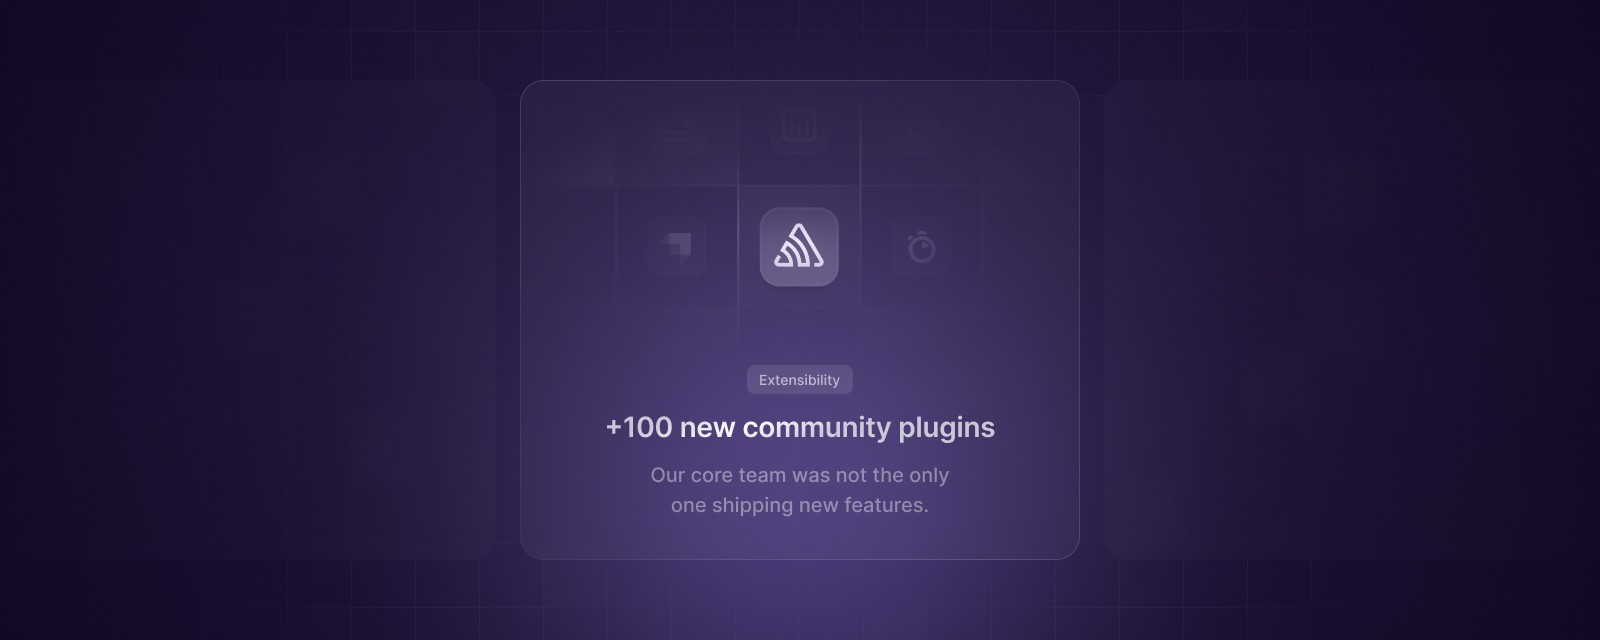 +100 new community plugins